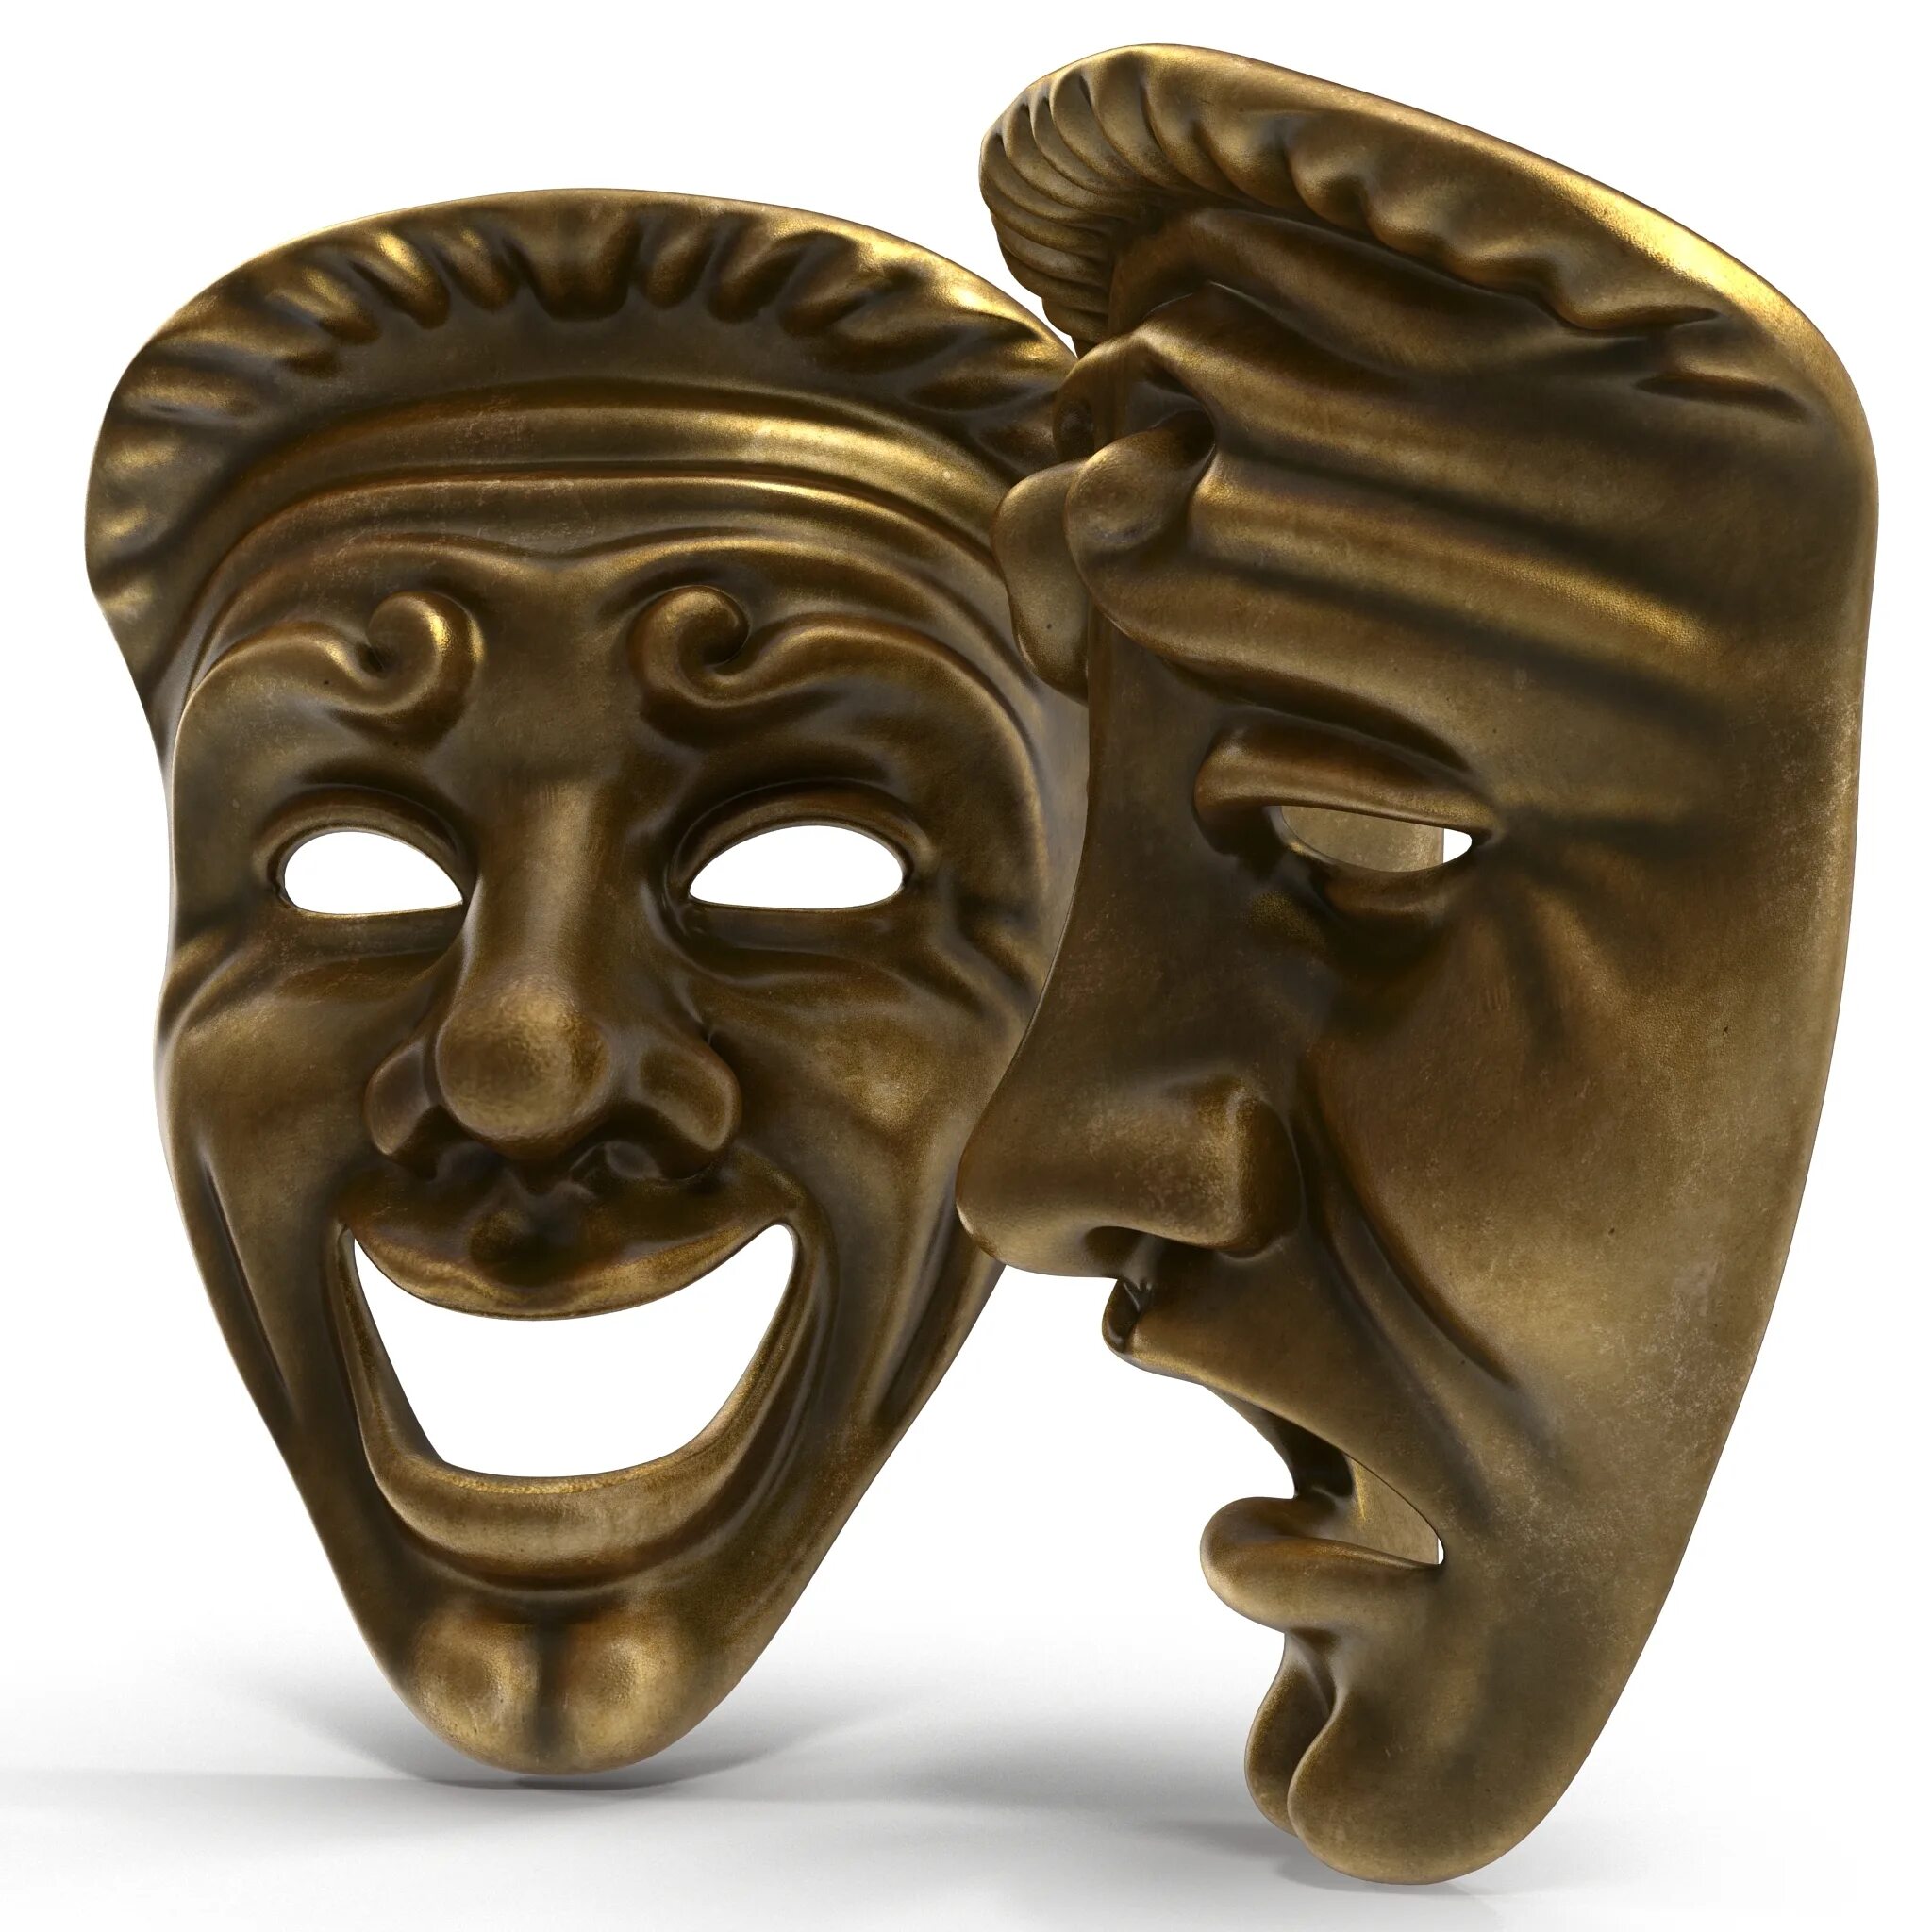 Театральные маски. Театральная маска скульптура. Греческие театральные маски. Драматические маски. Театральные маски купить